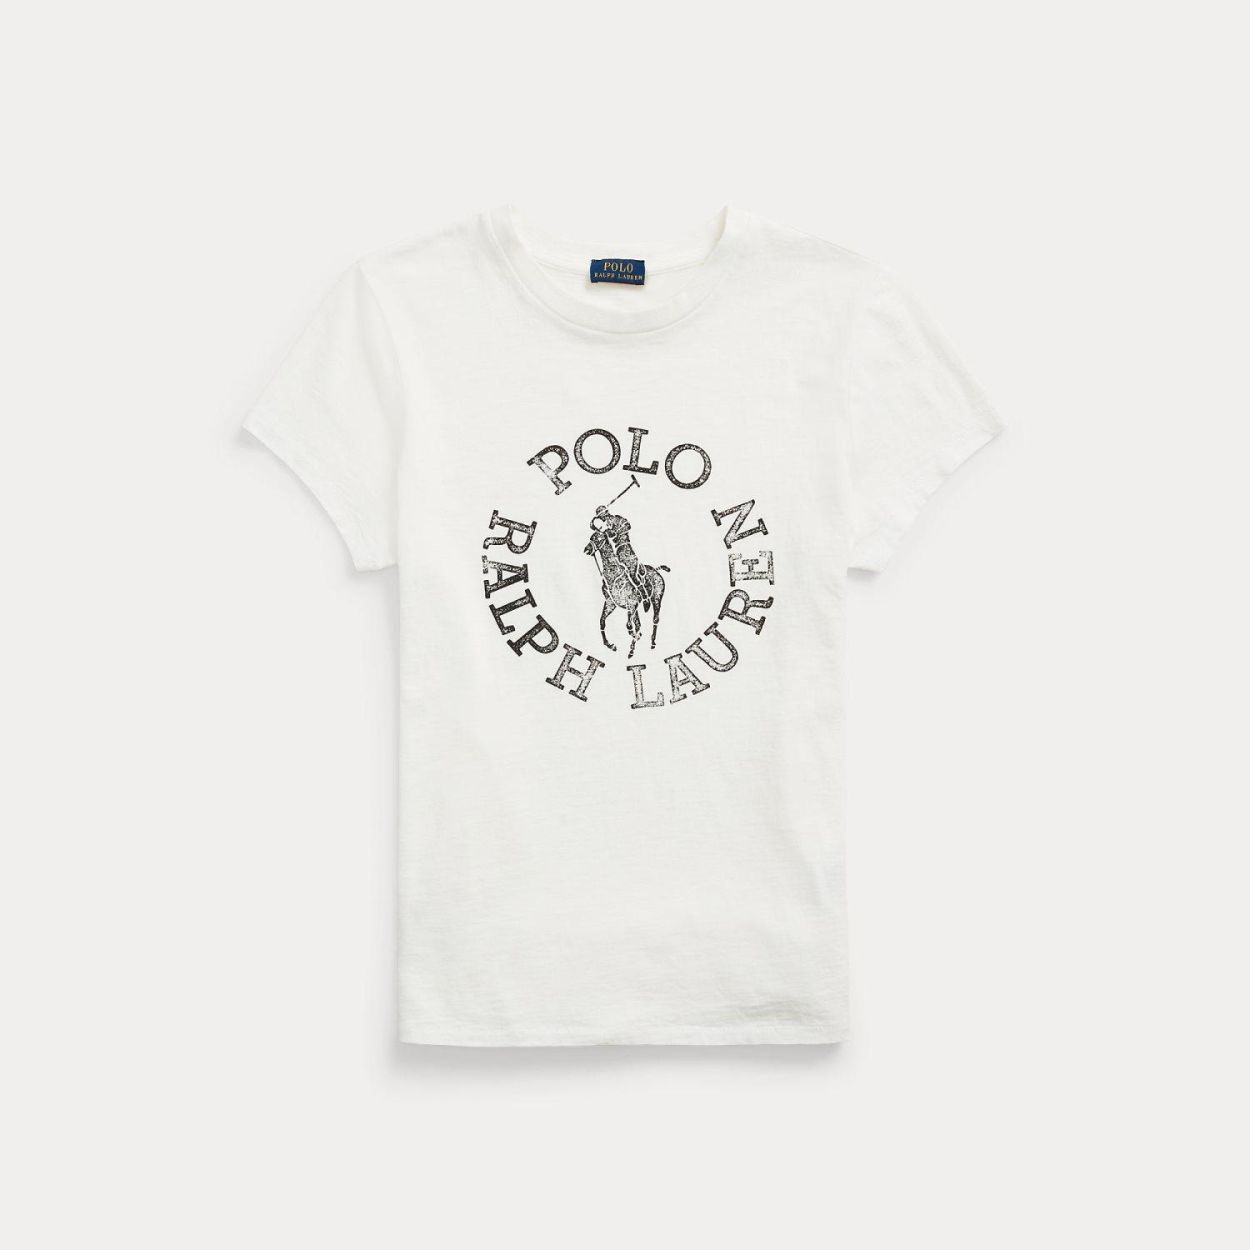 Ralph Lauren T-shirt Wit  (211873112001/Deckwash White) - Corylie (Roeselare)